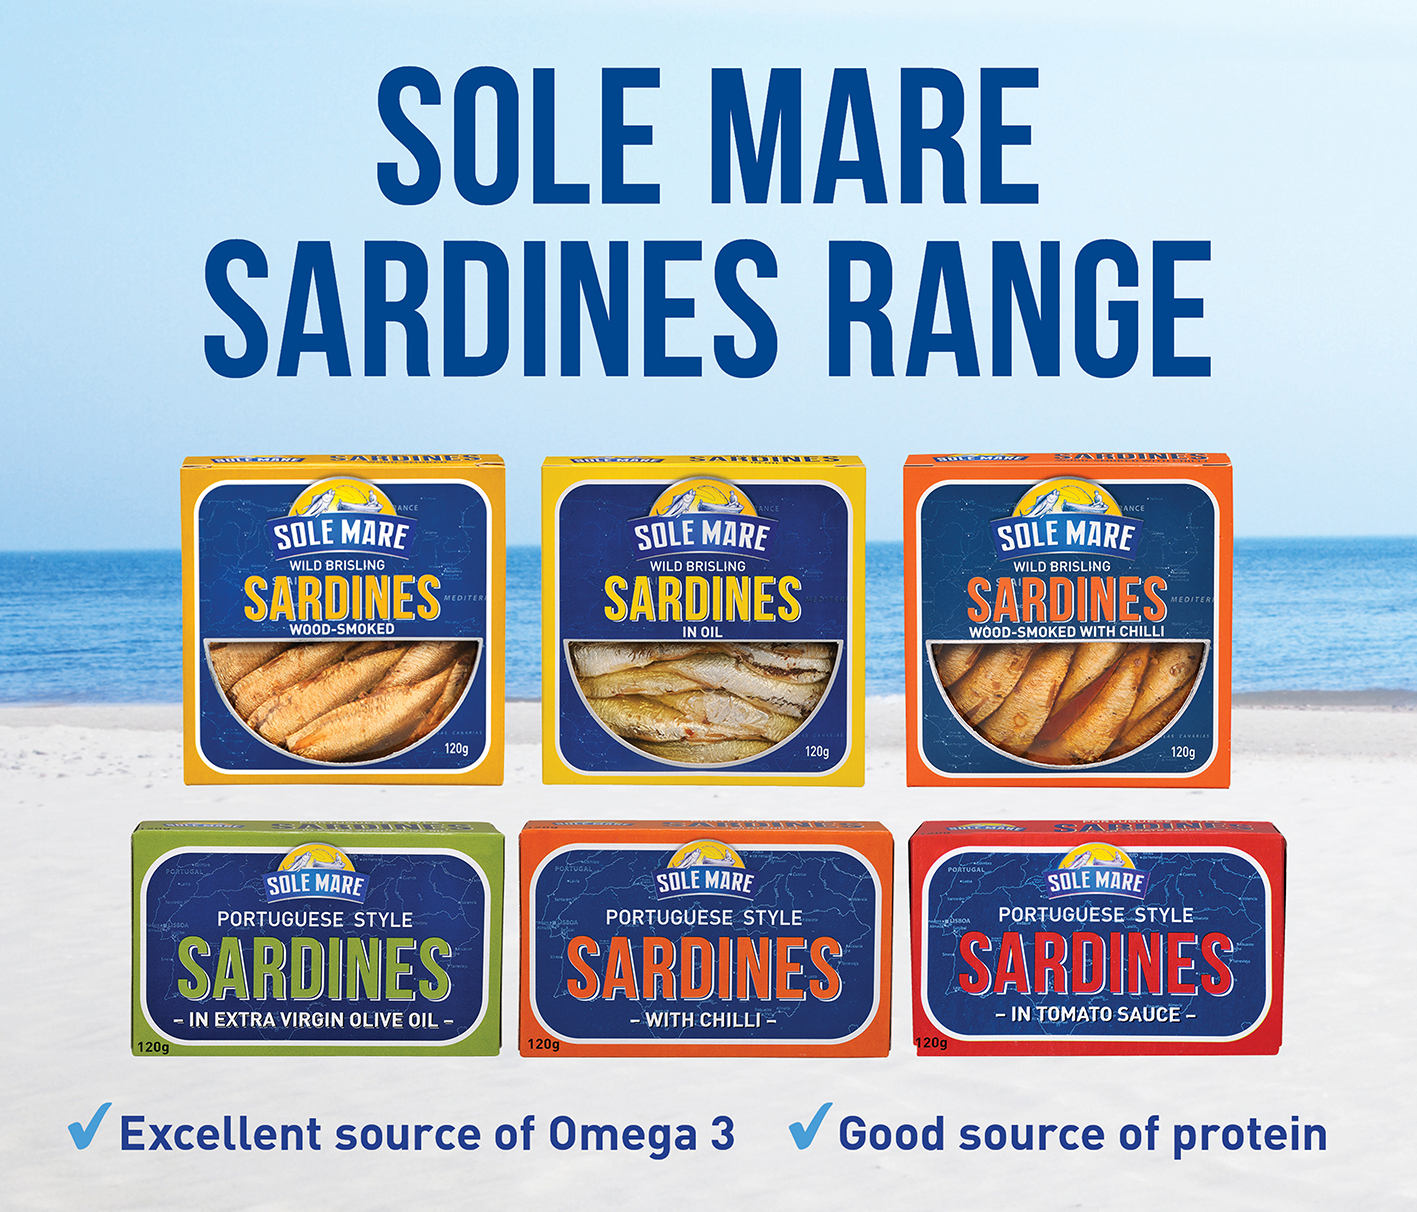 Sole Mare introduces new Sardines range